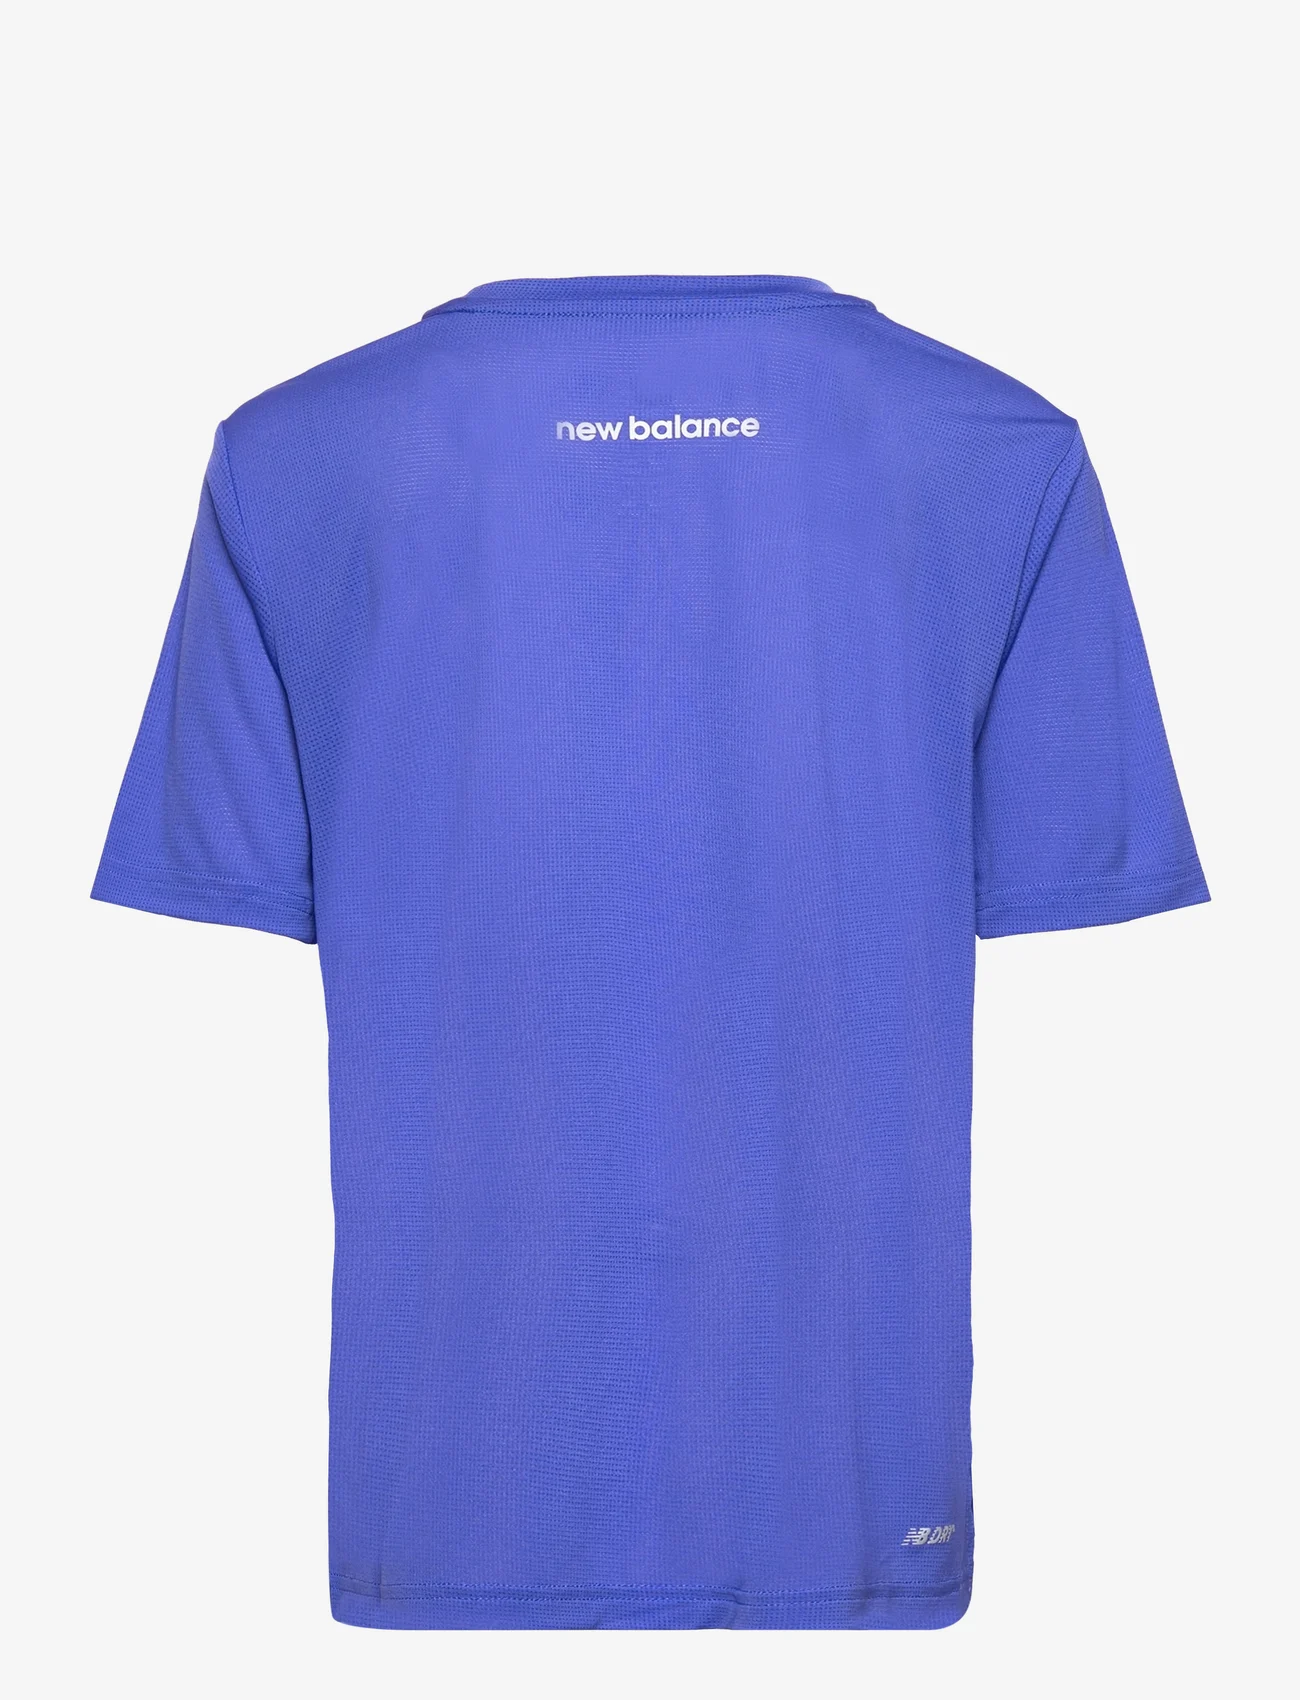 New Balance - Accelerate Short Sleeve - kortärmade - marine blue - 1